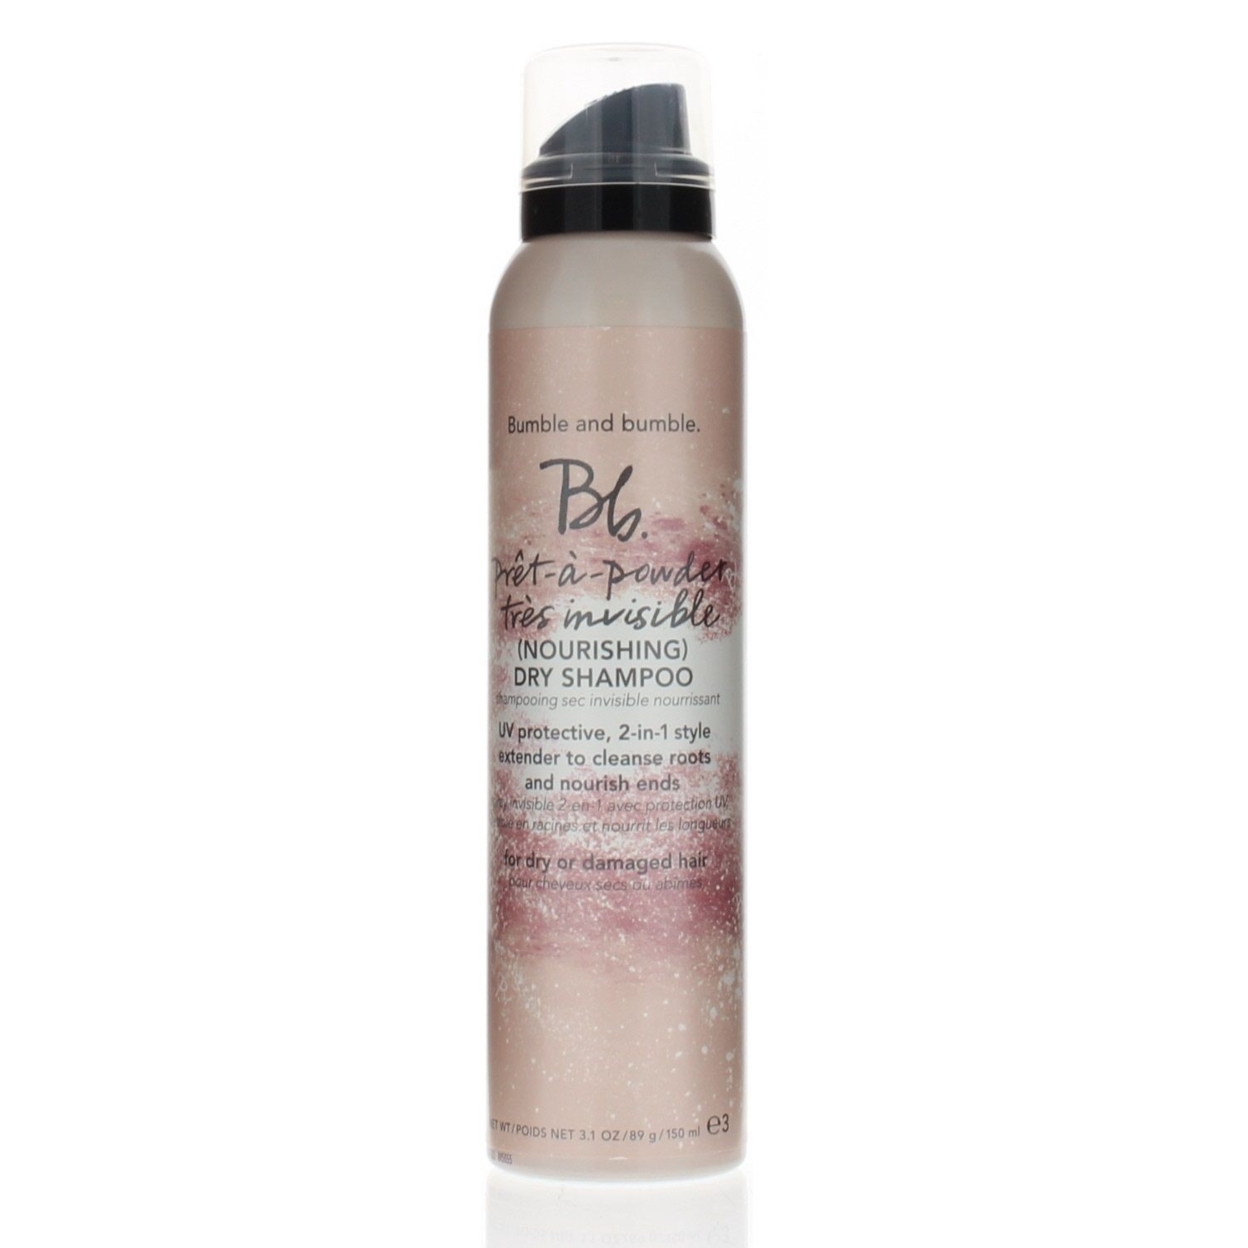 Bumble And Bumble Bb. Pret-A-Powder Tres Invisible (Nourishing) Dry Shampoo 3.1oz/150ml